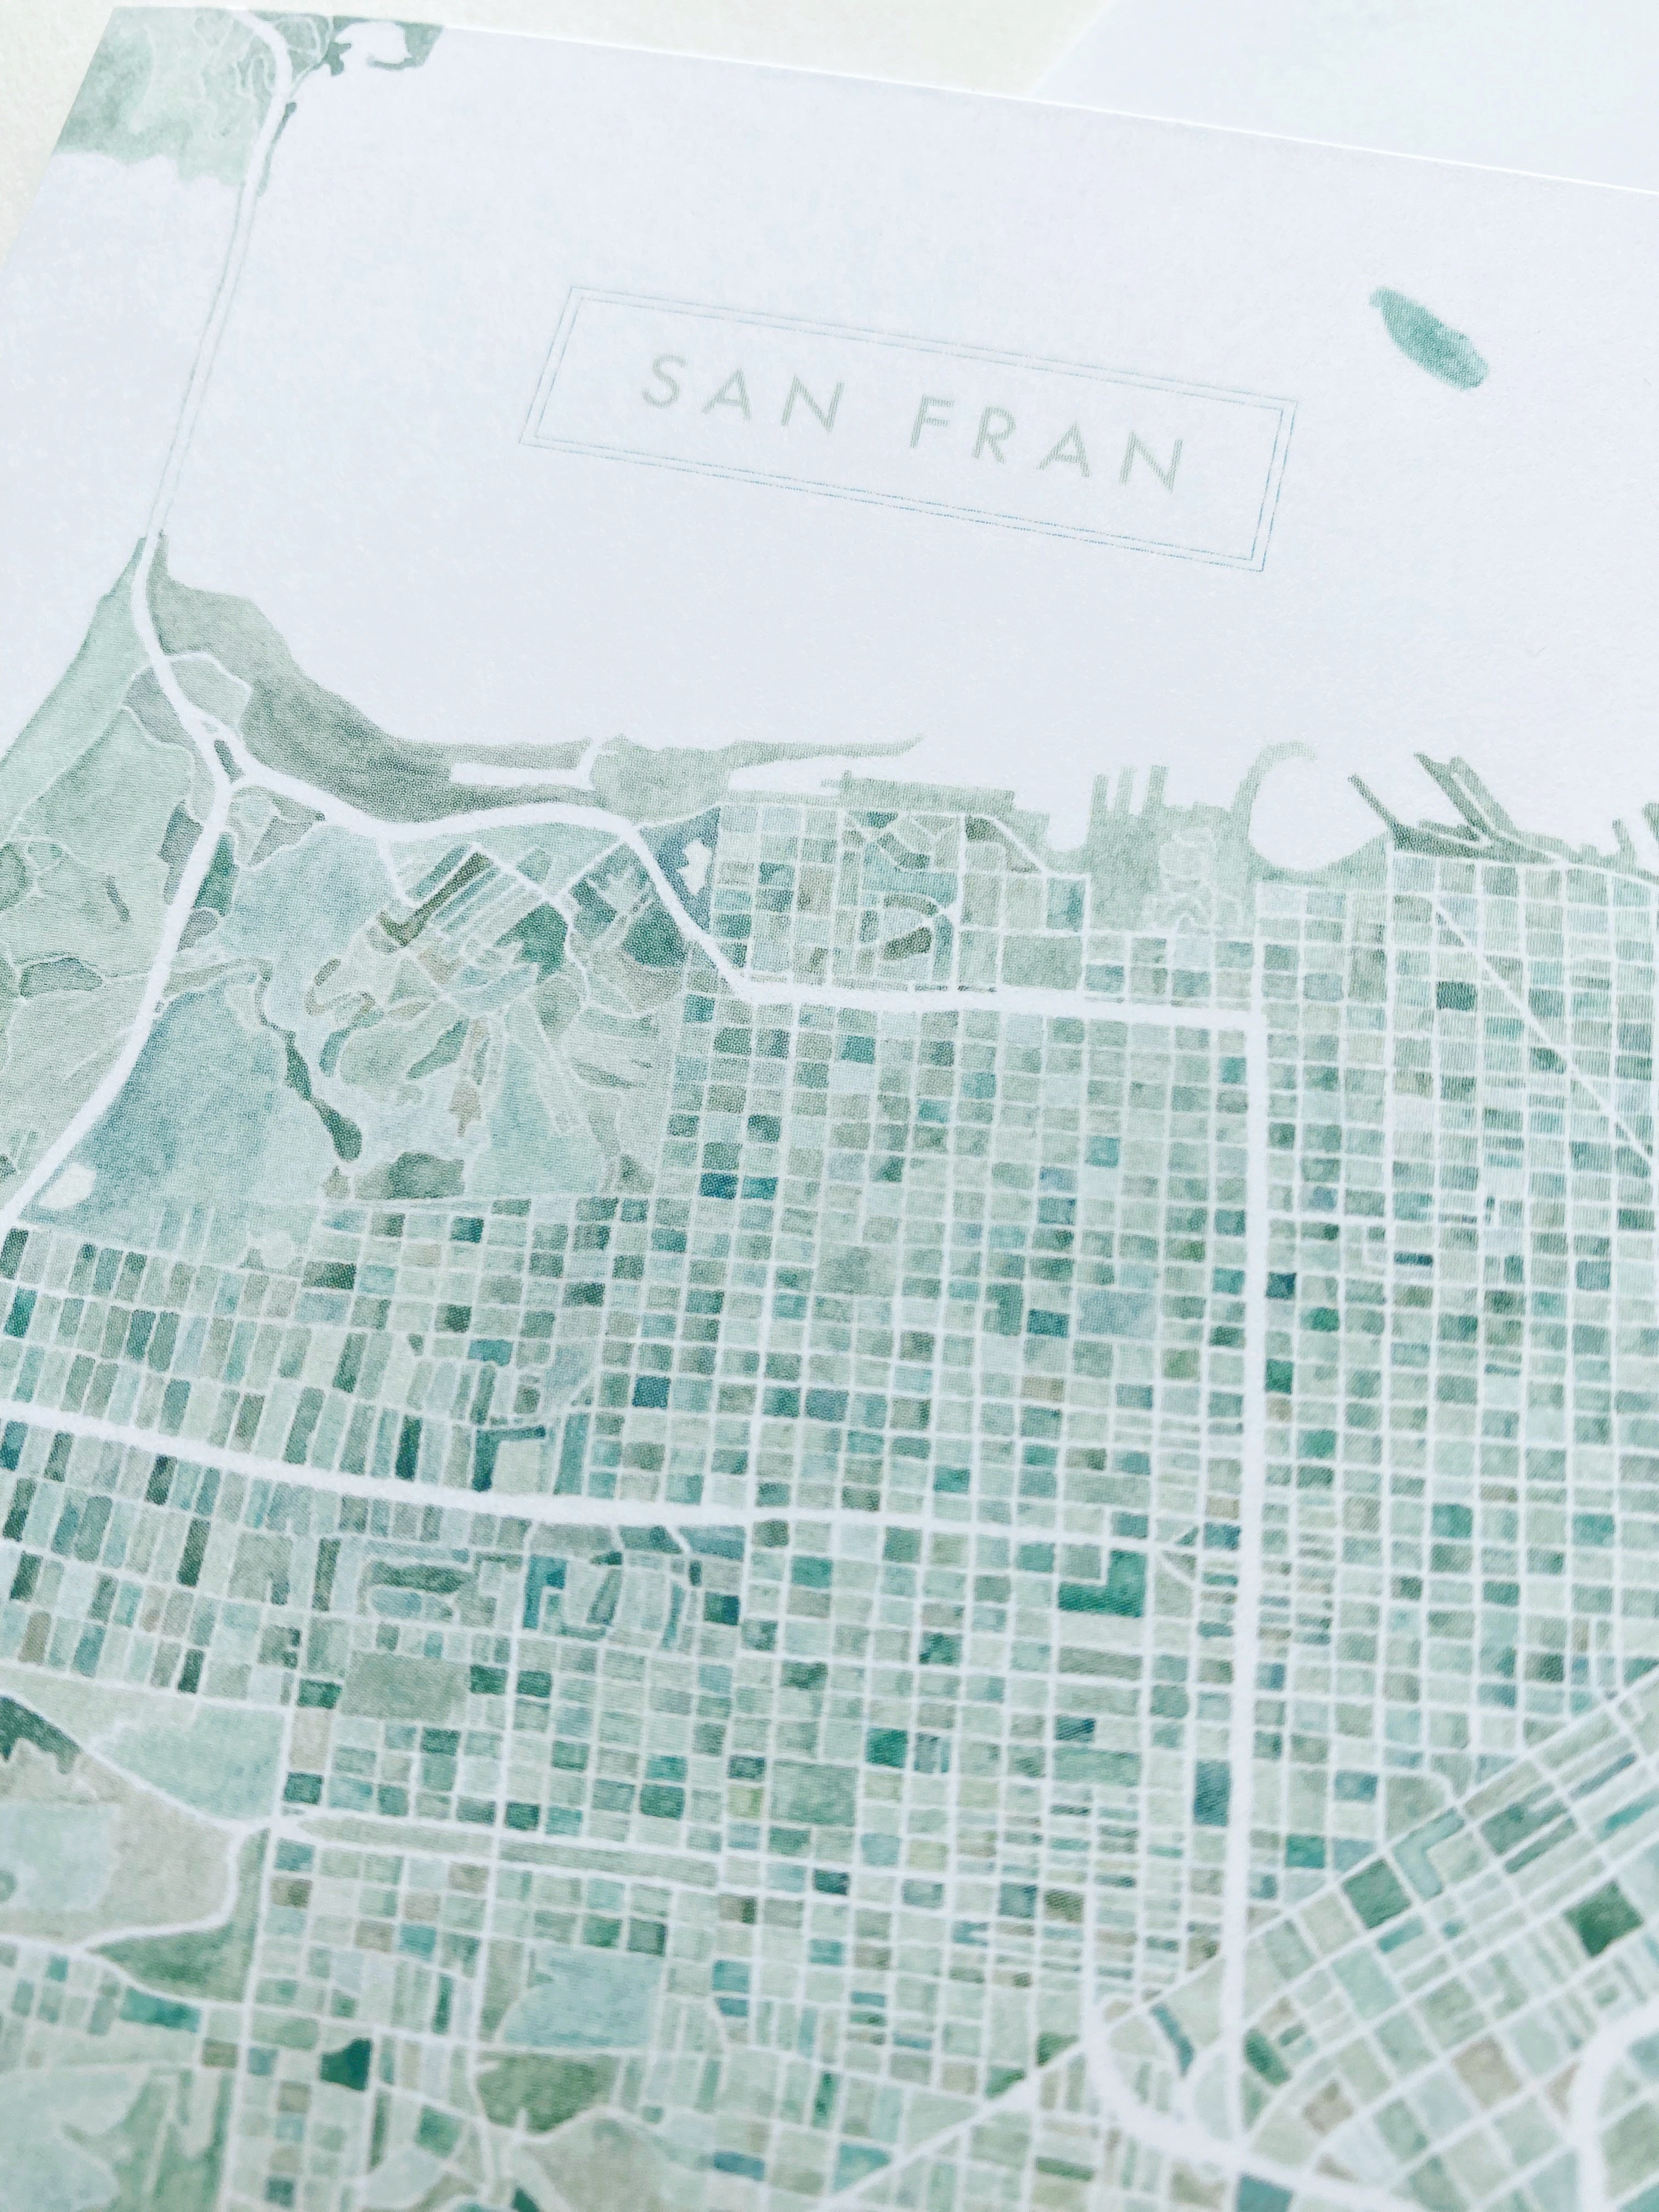 SAN FRAN San Francisco California Watercolor Map - city nickname greeting card